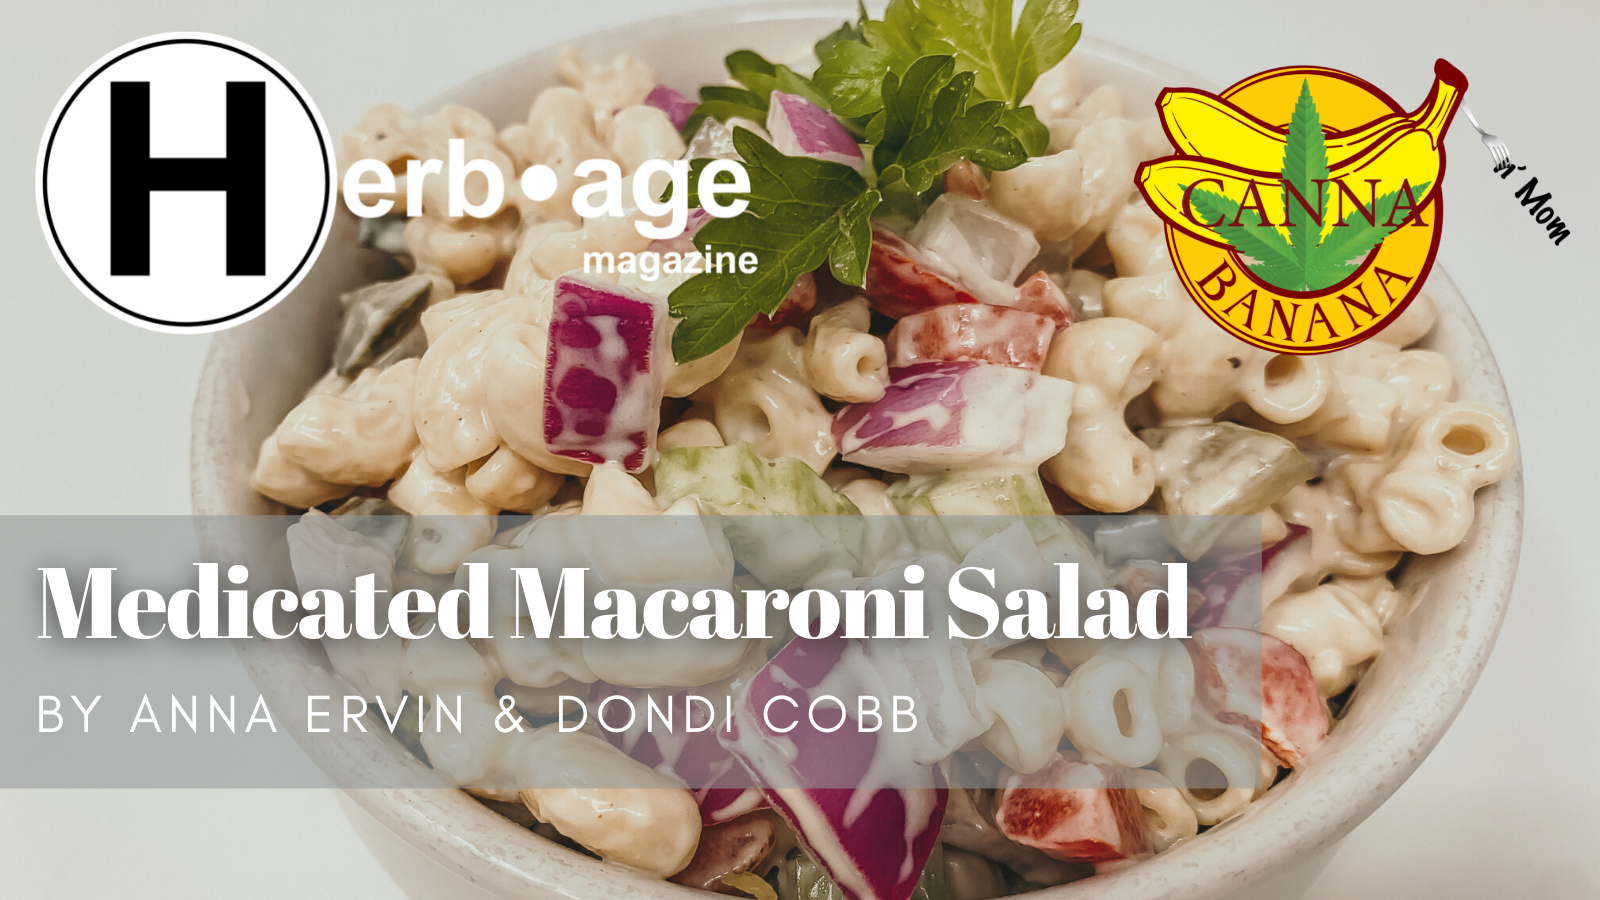 Medicated Macaroni Salad